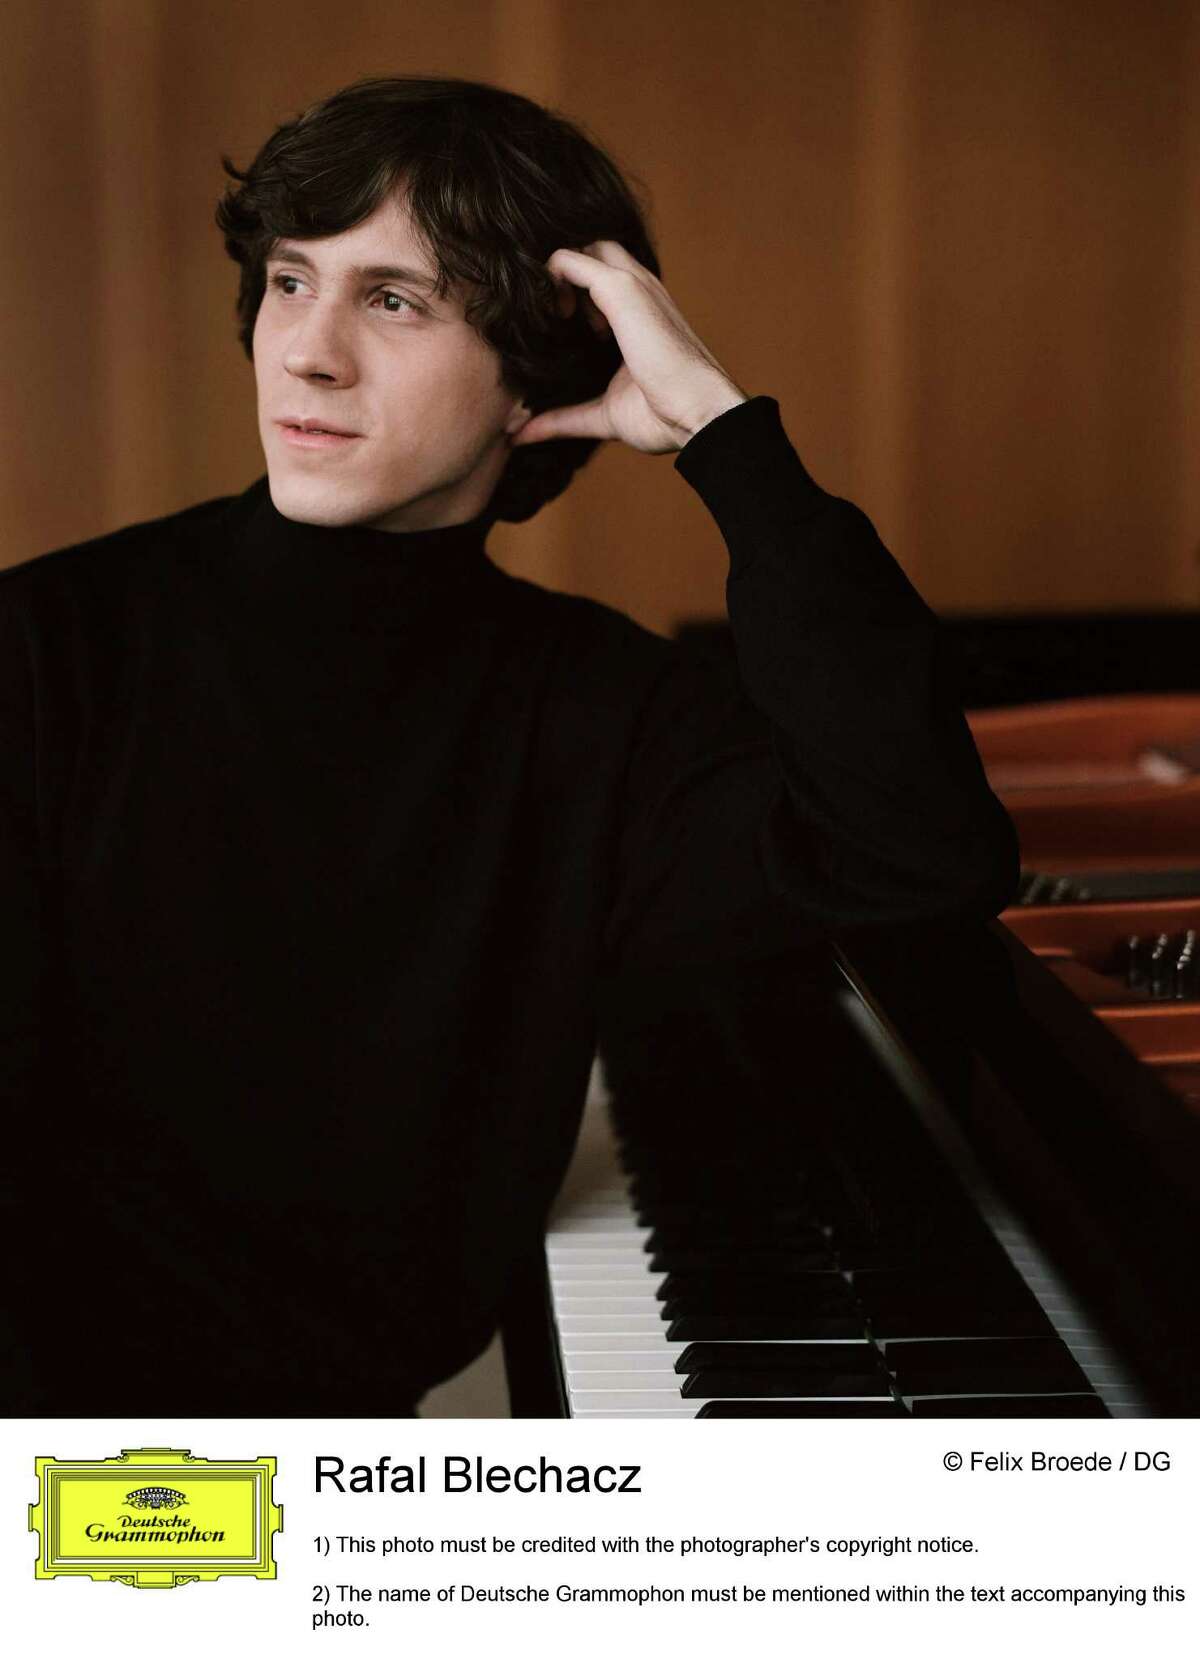 Pianist Rafal Blechacz, who will perform at the Union College Concert Series on Oct. 10, 2012. (Felix Broede/ Deutsche Grammophon)